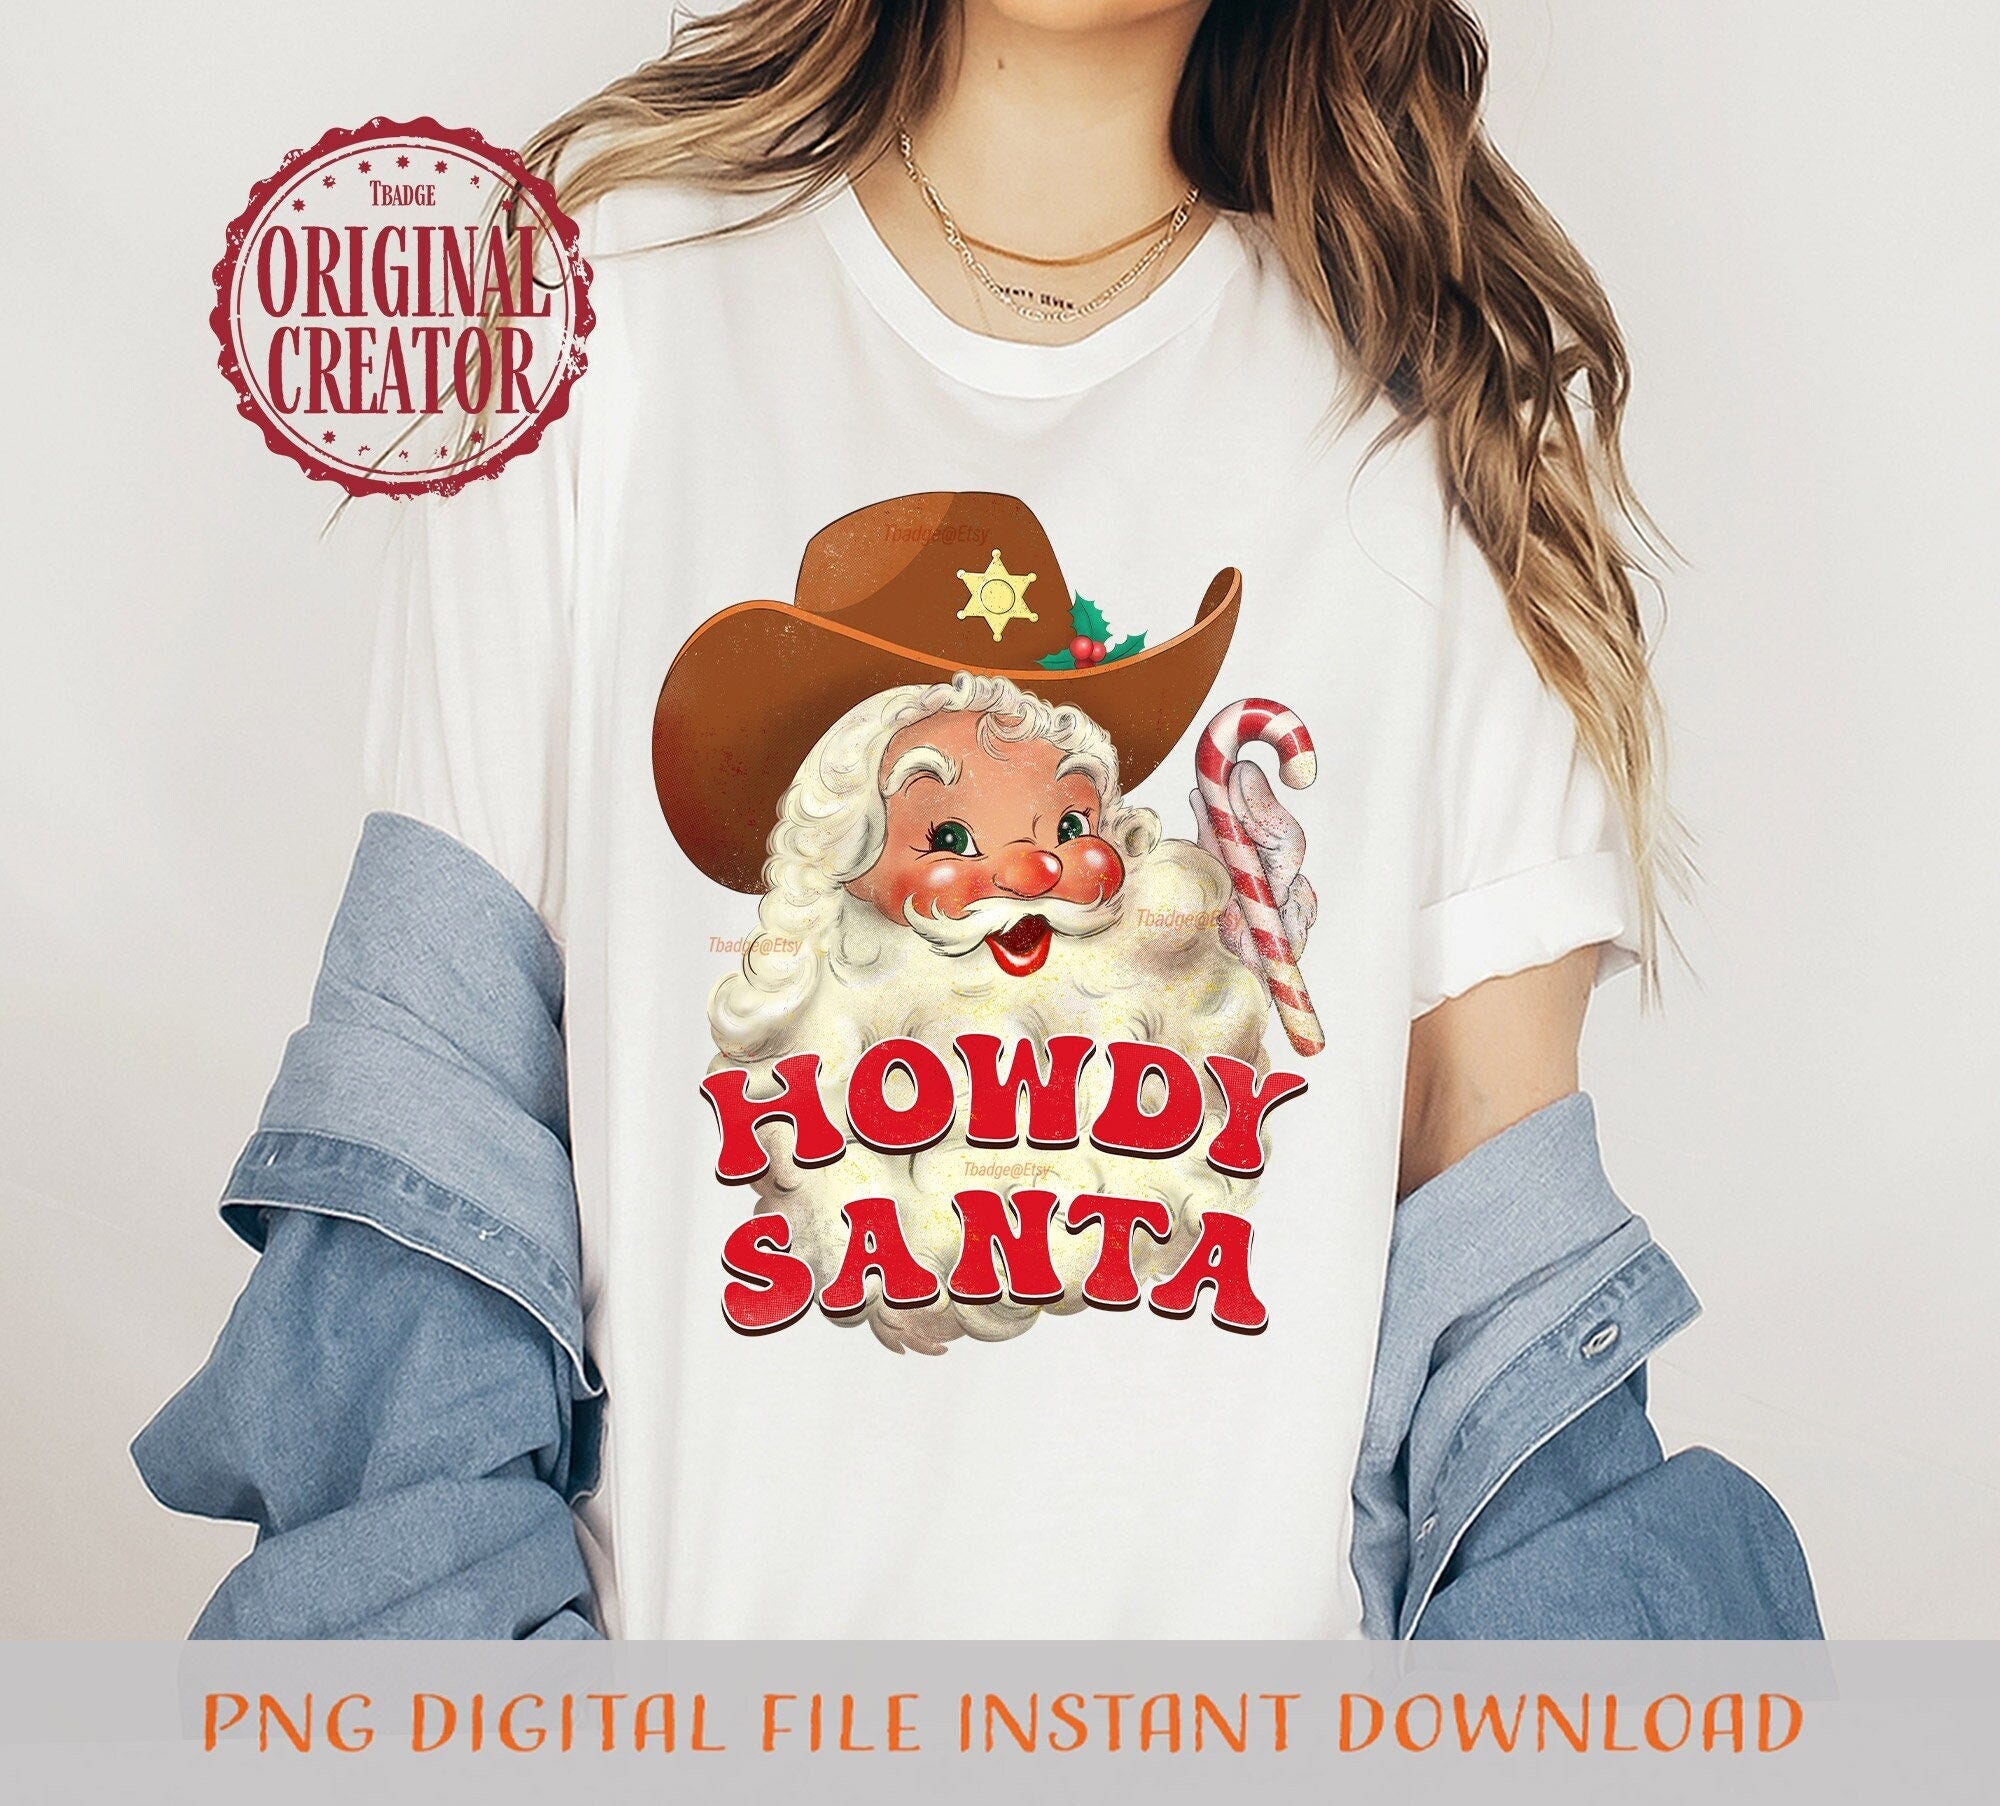 Cowboy Santa, Western Christmas Png, Howdy Christmas Sublimation file for Shirt Design, Digital download.